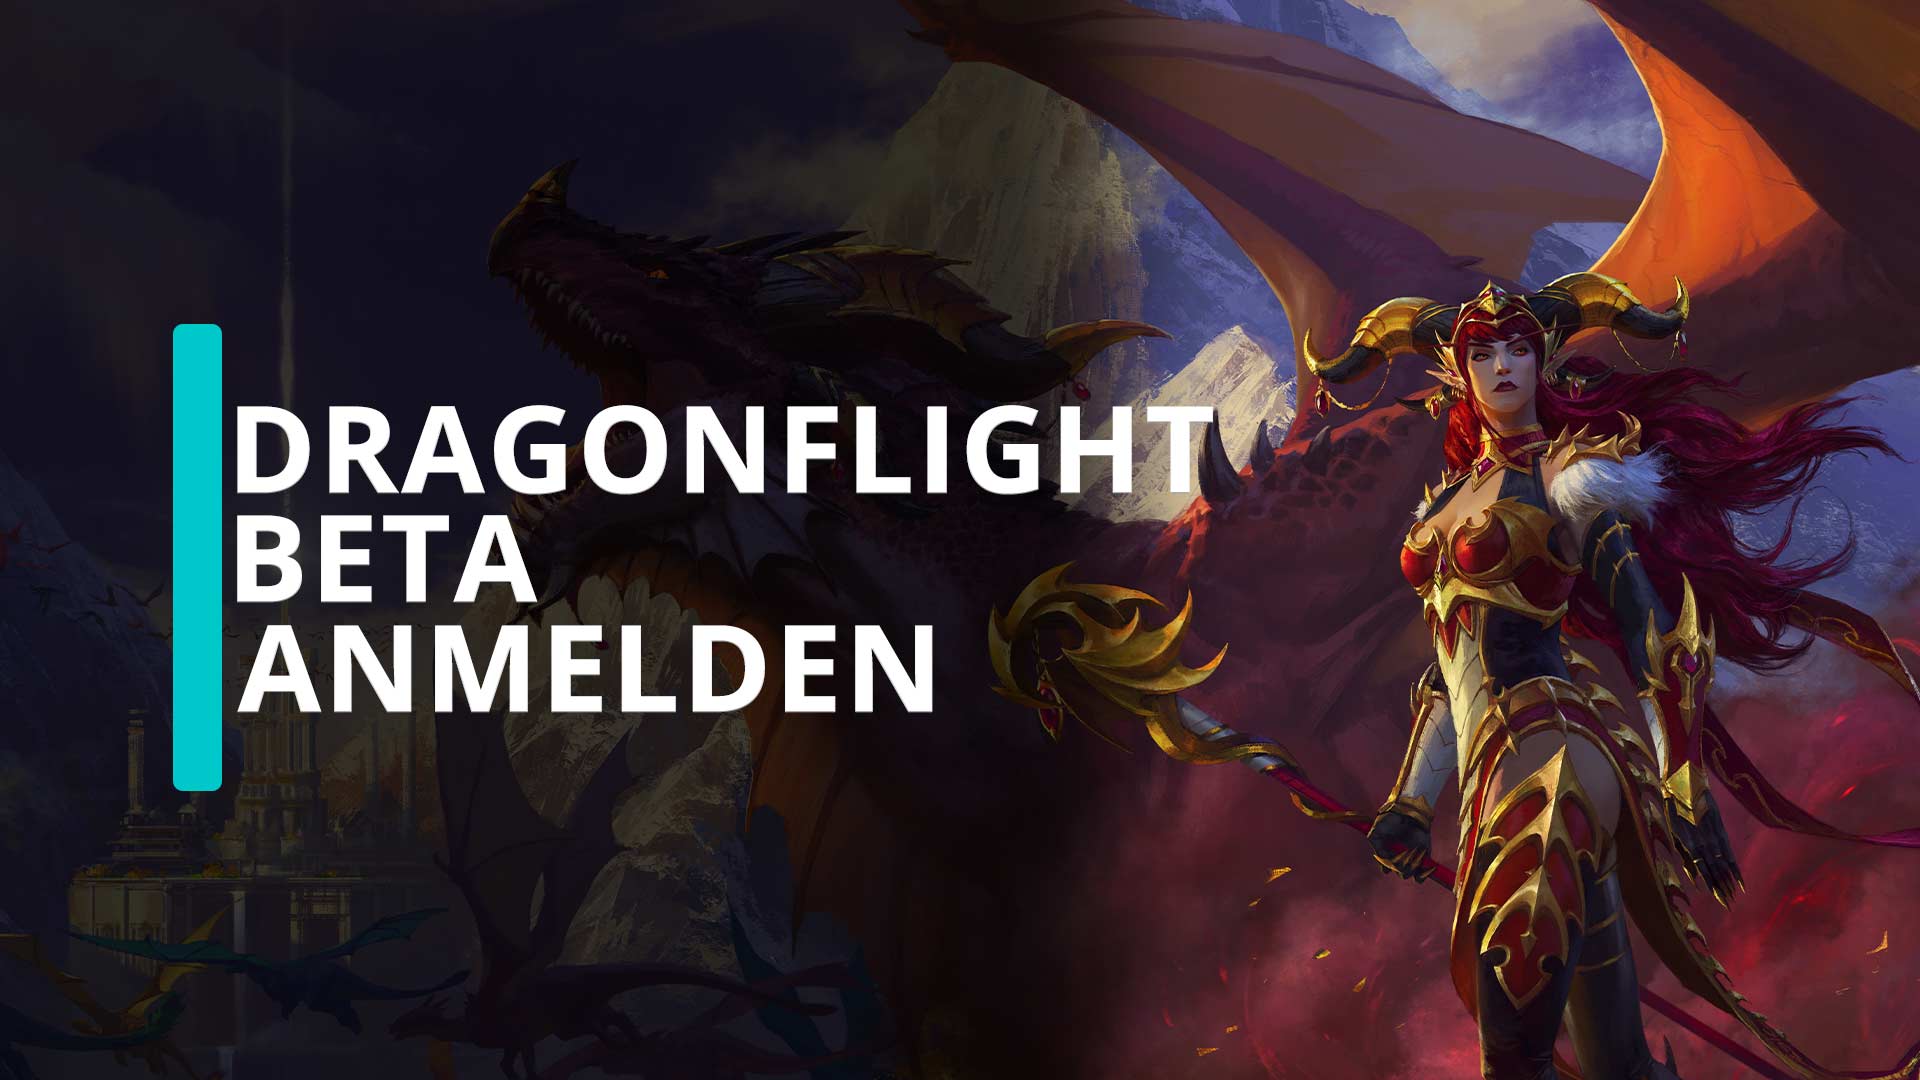 WoW Dragonflight Beta anmelden: So geht's